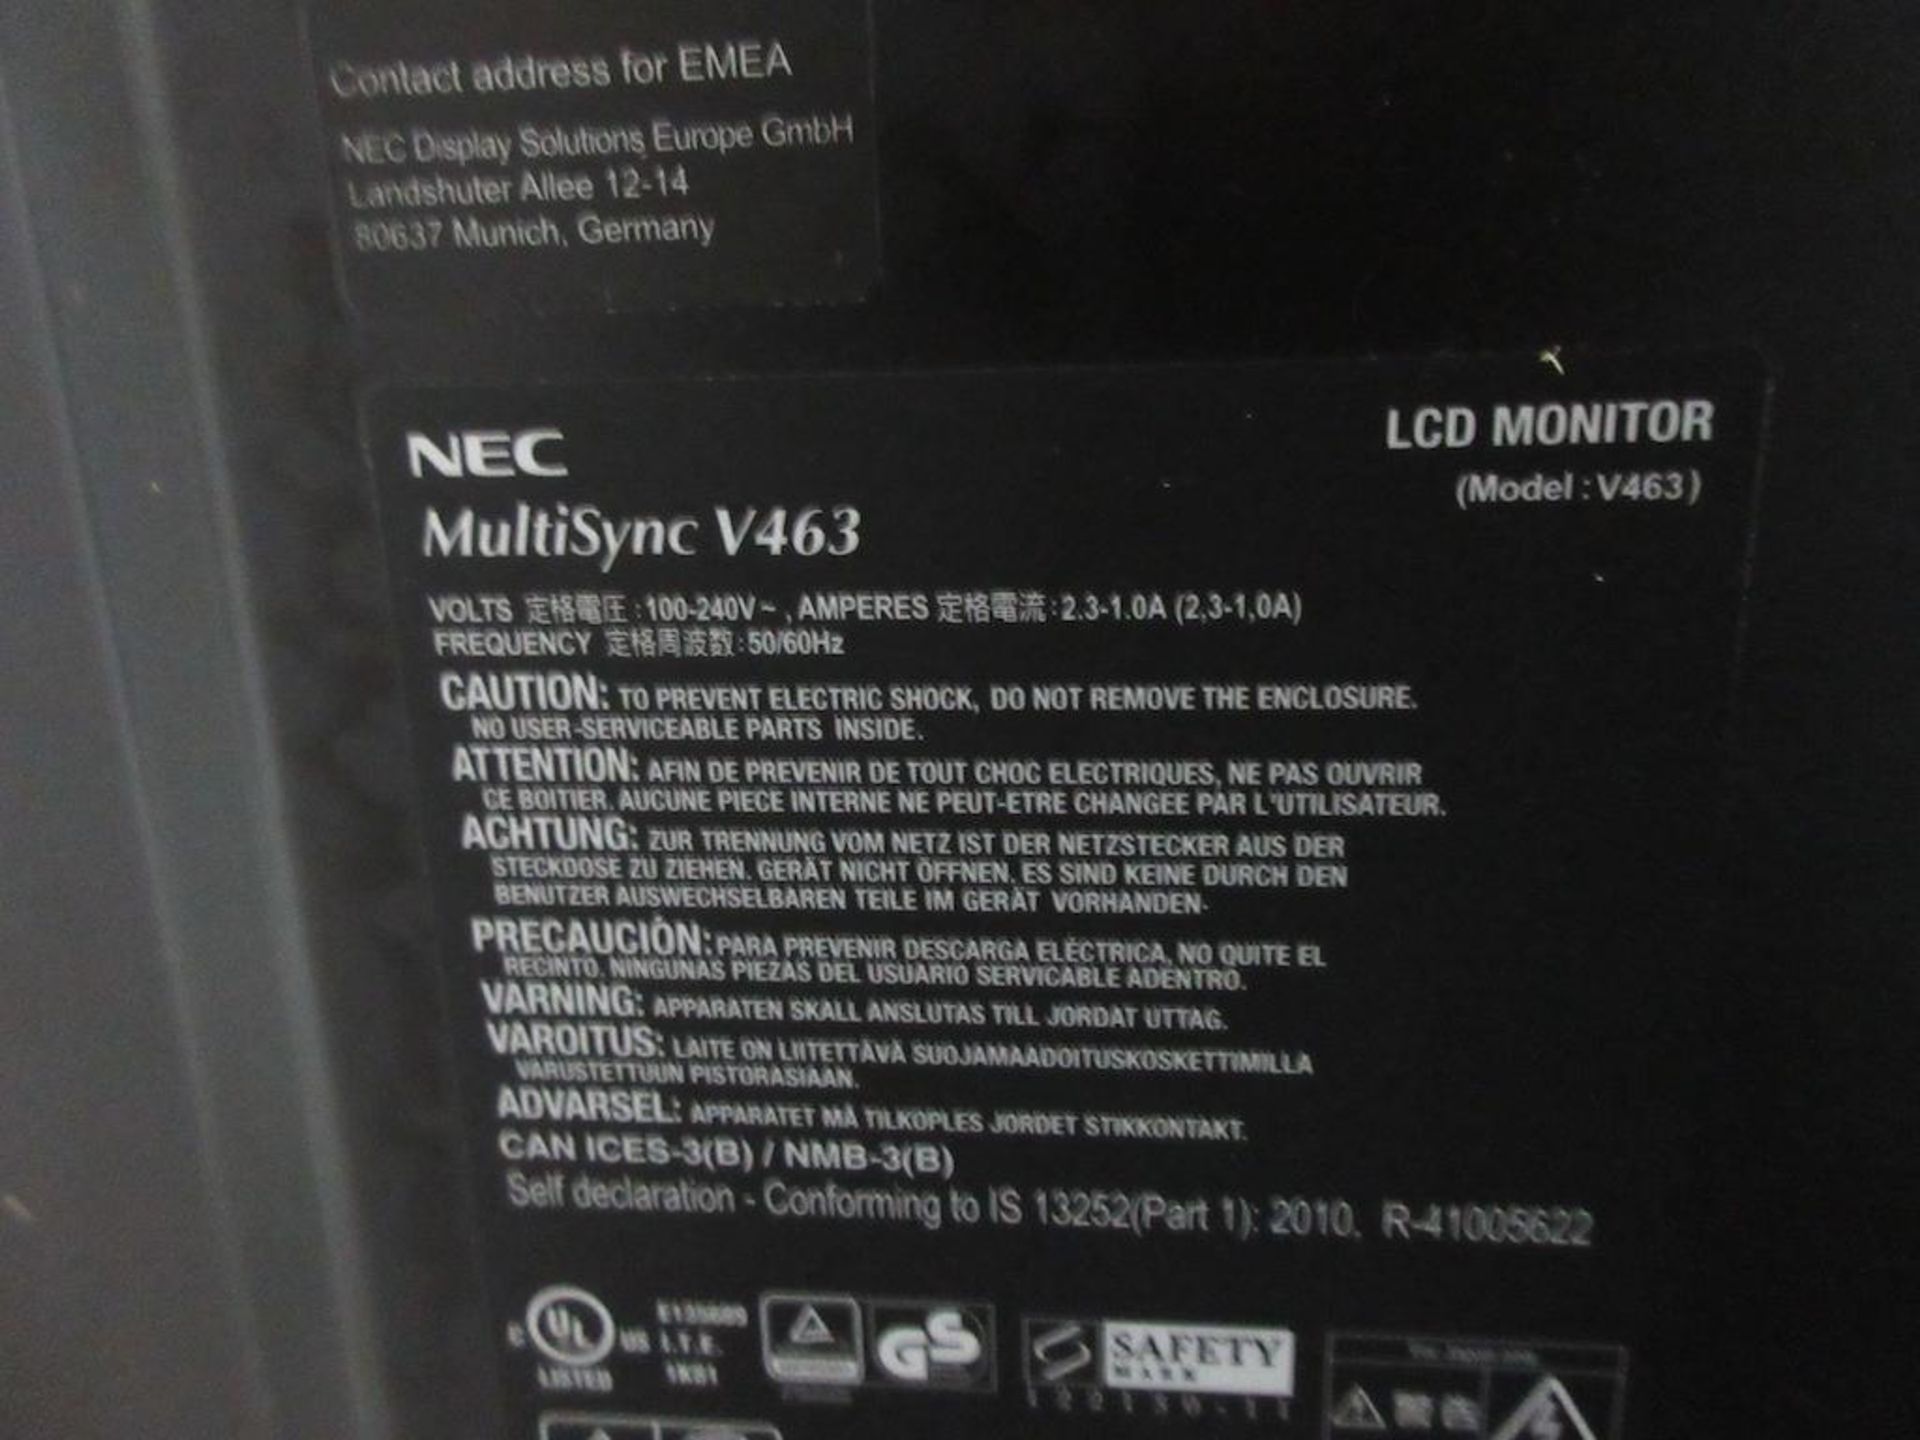 NEC multisync V463 46" LCD Monitor w remote - Image 3 of 3